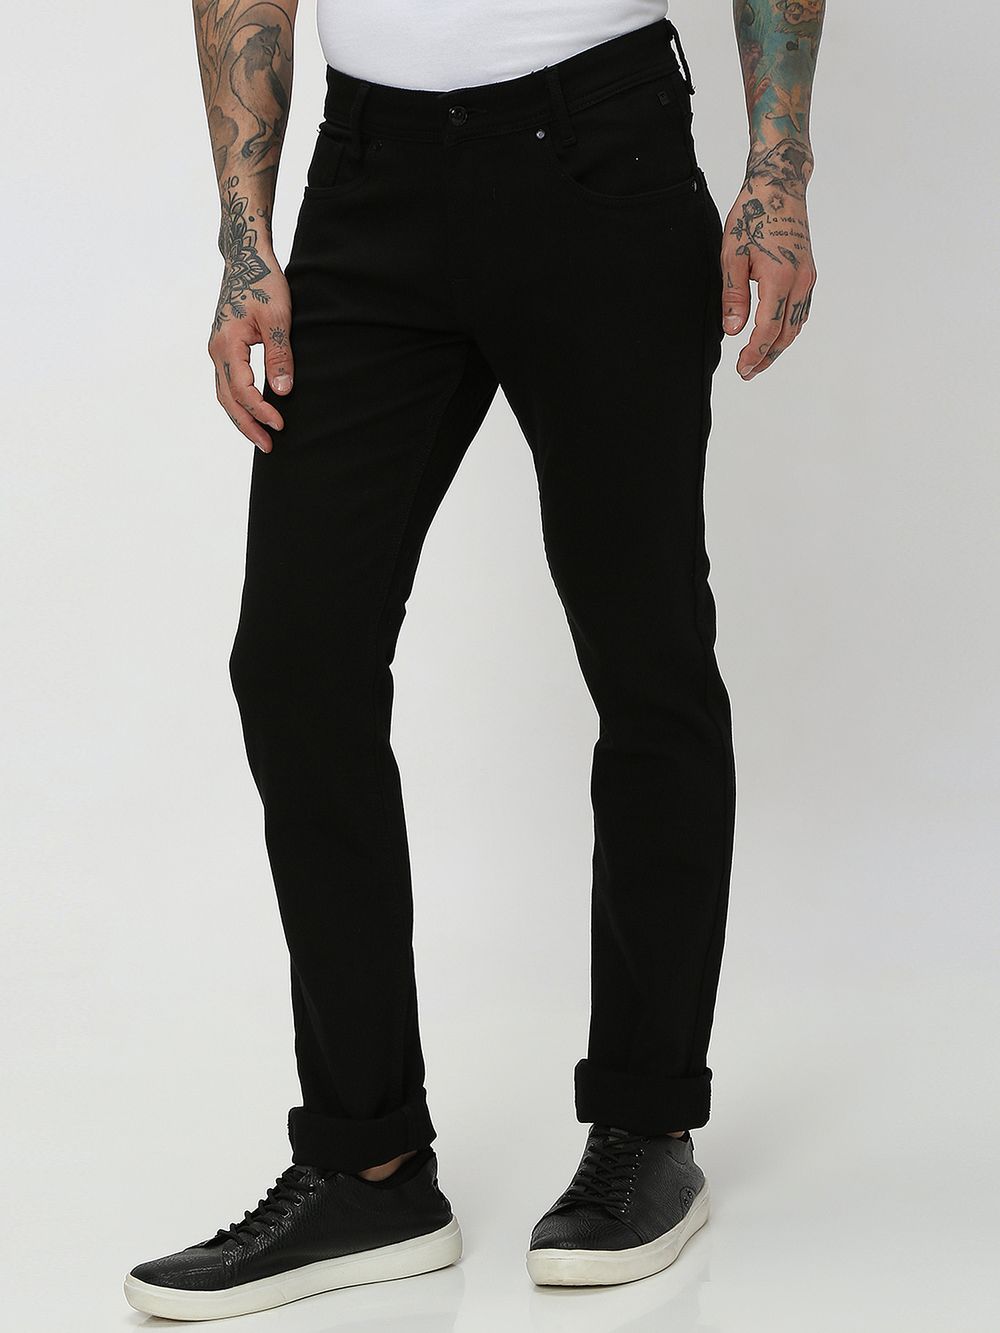 Jet Black Super Slim Fit Denim Deluxe Stretch Jeans